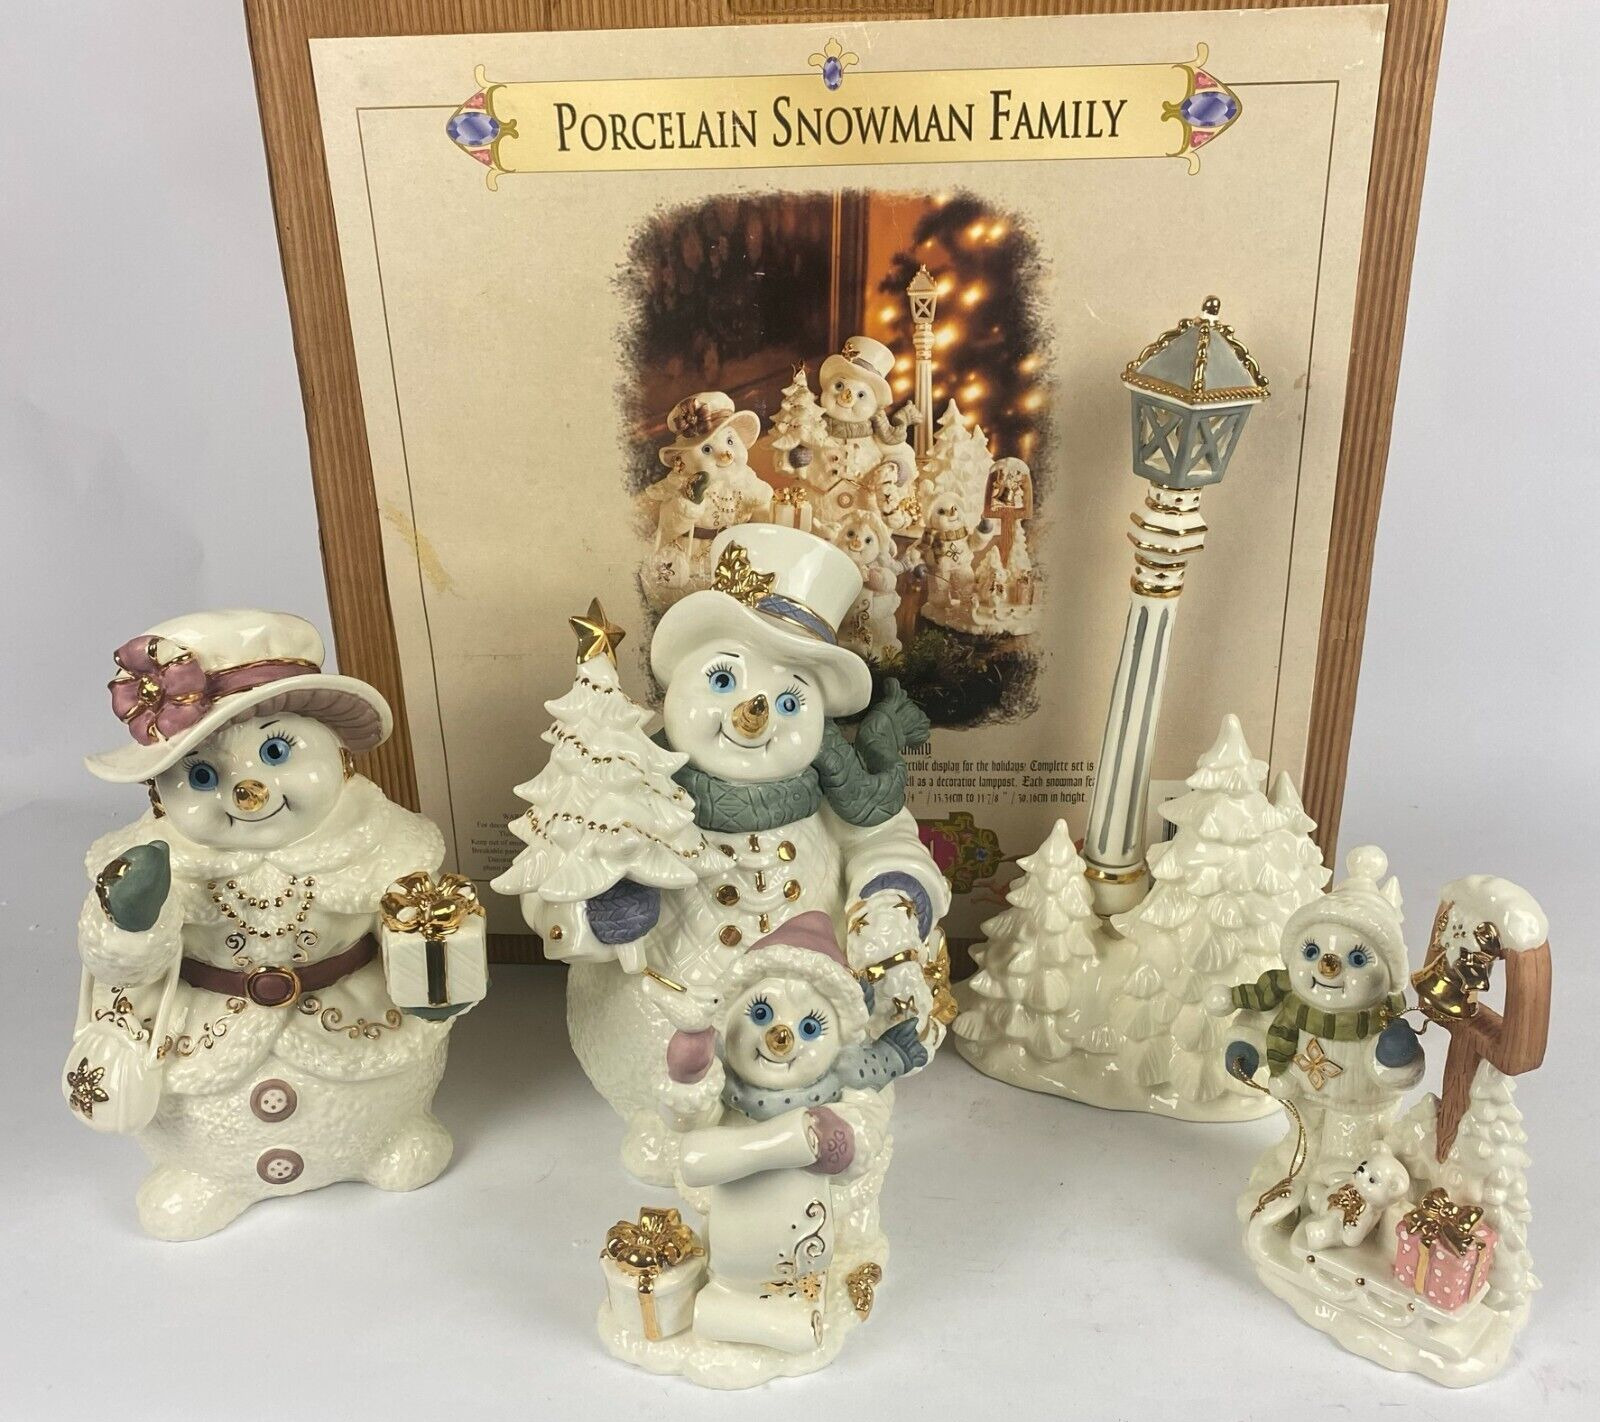 Porcelain Snowman Family Grandeur Noel Collectors Edition 2001 Christmas Holiday